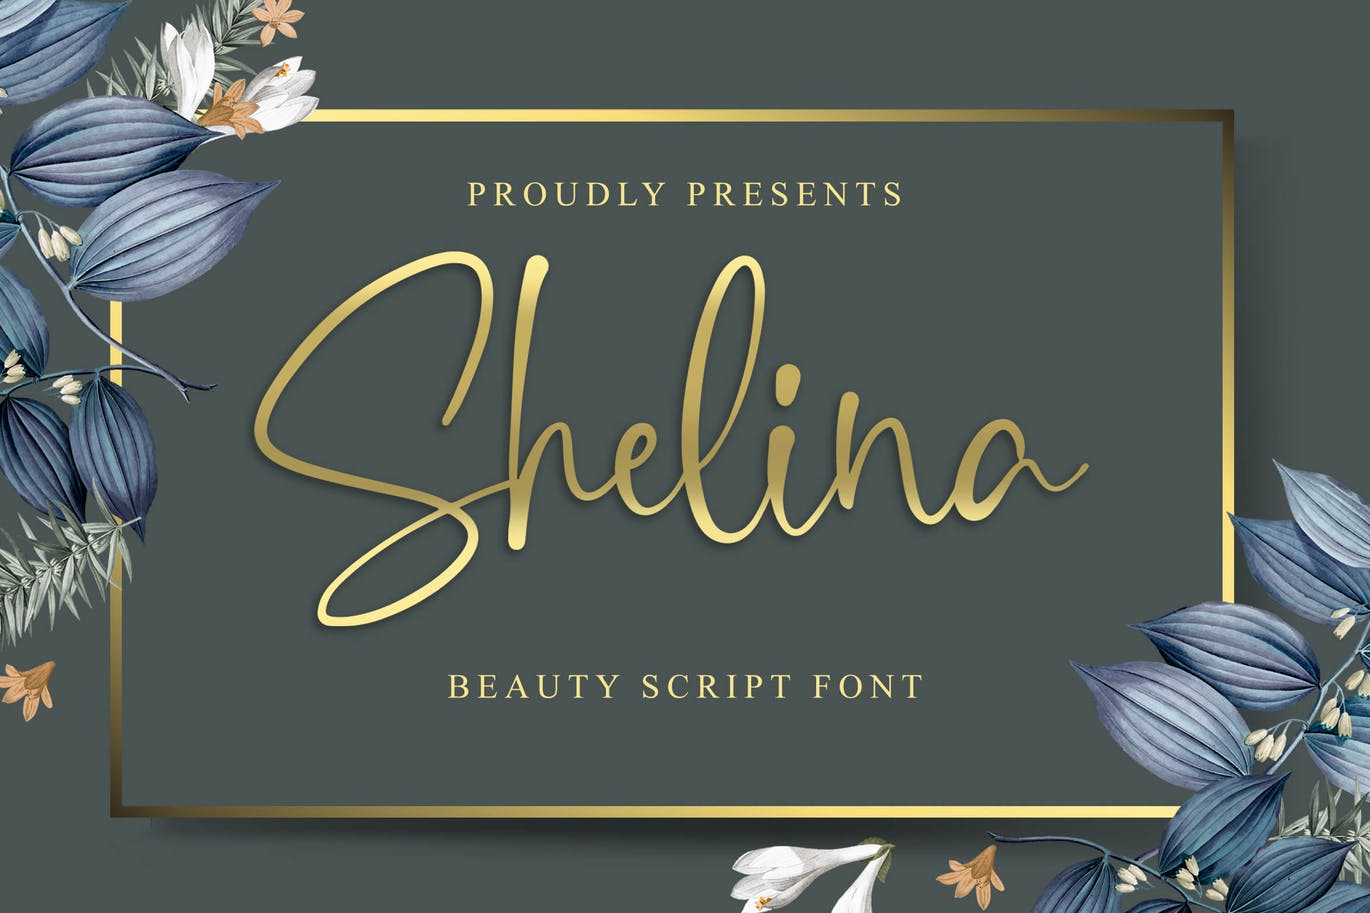 英文连笔书法字体素材库精选 Shelina Beauty Script Font插图